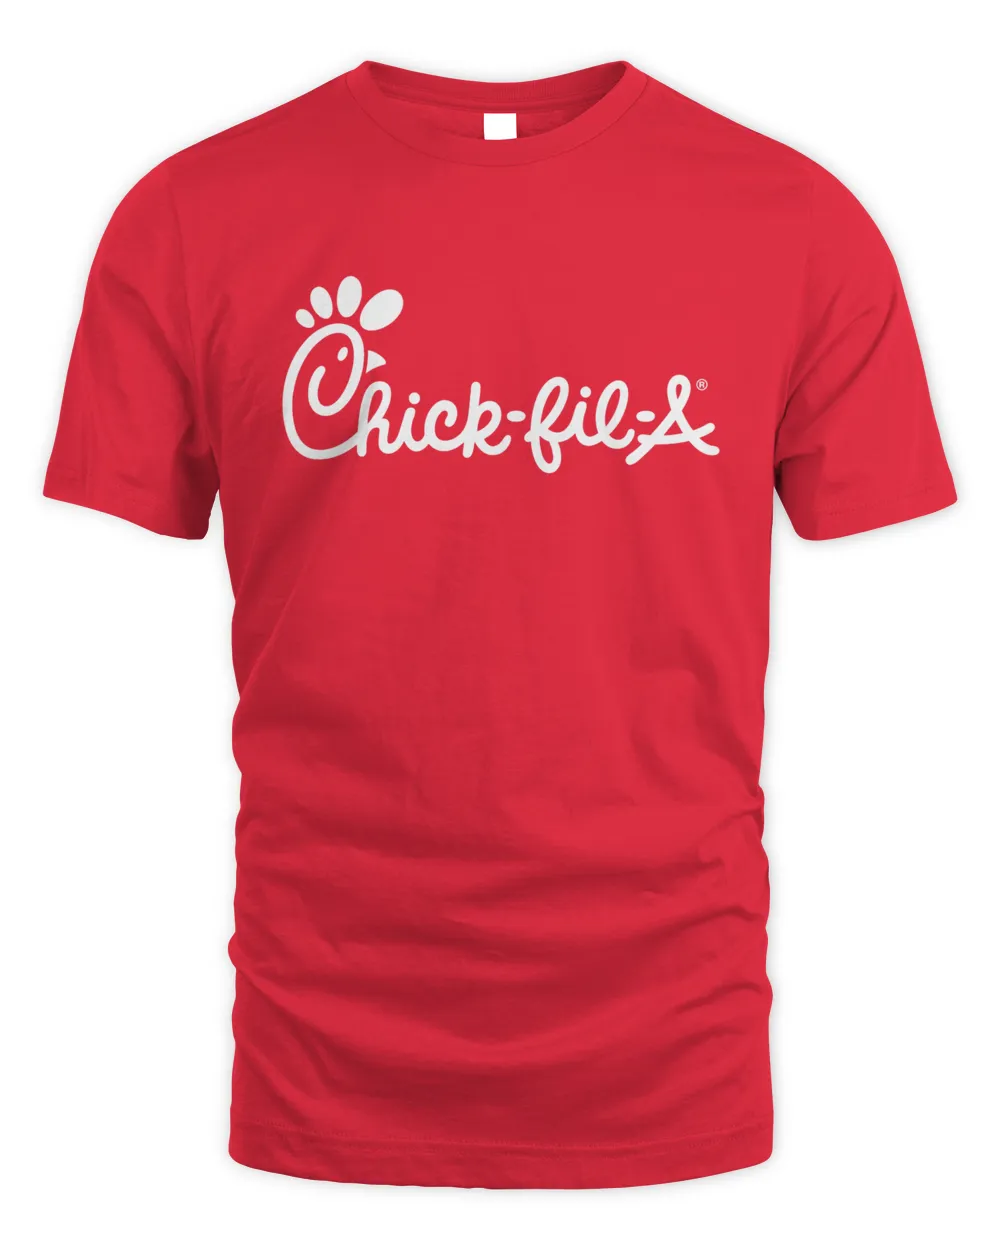 Chick Fil A Shirt